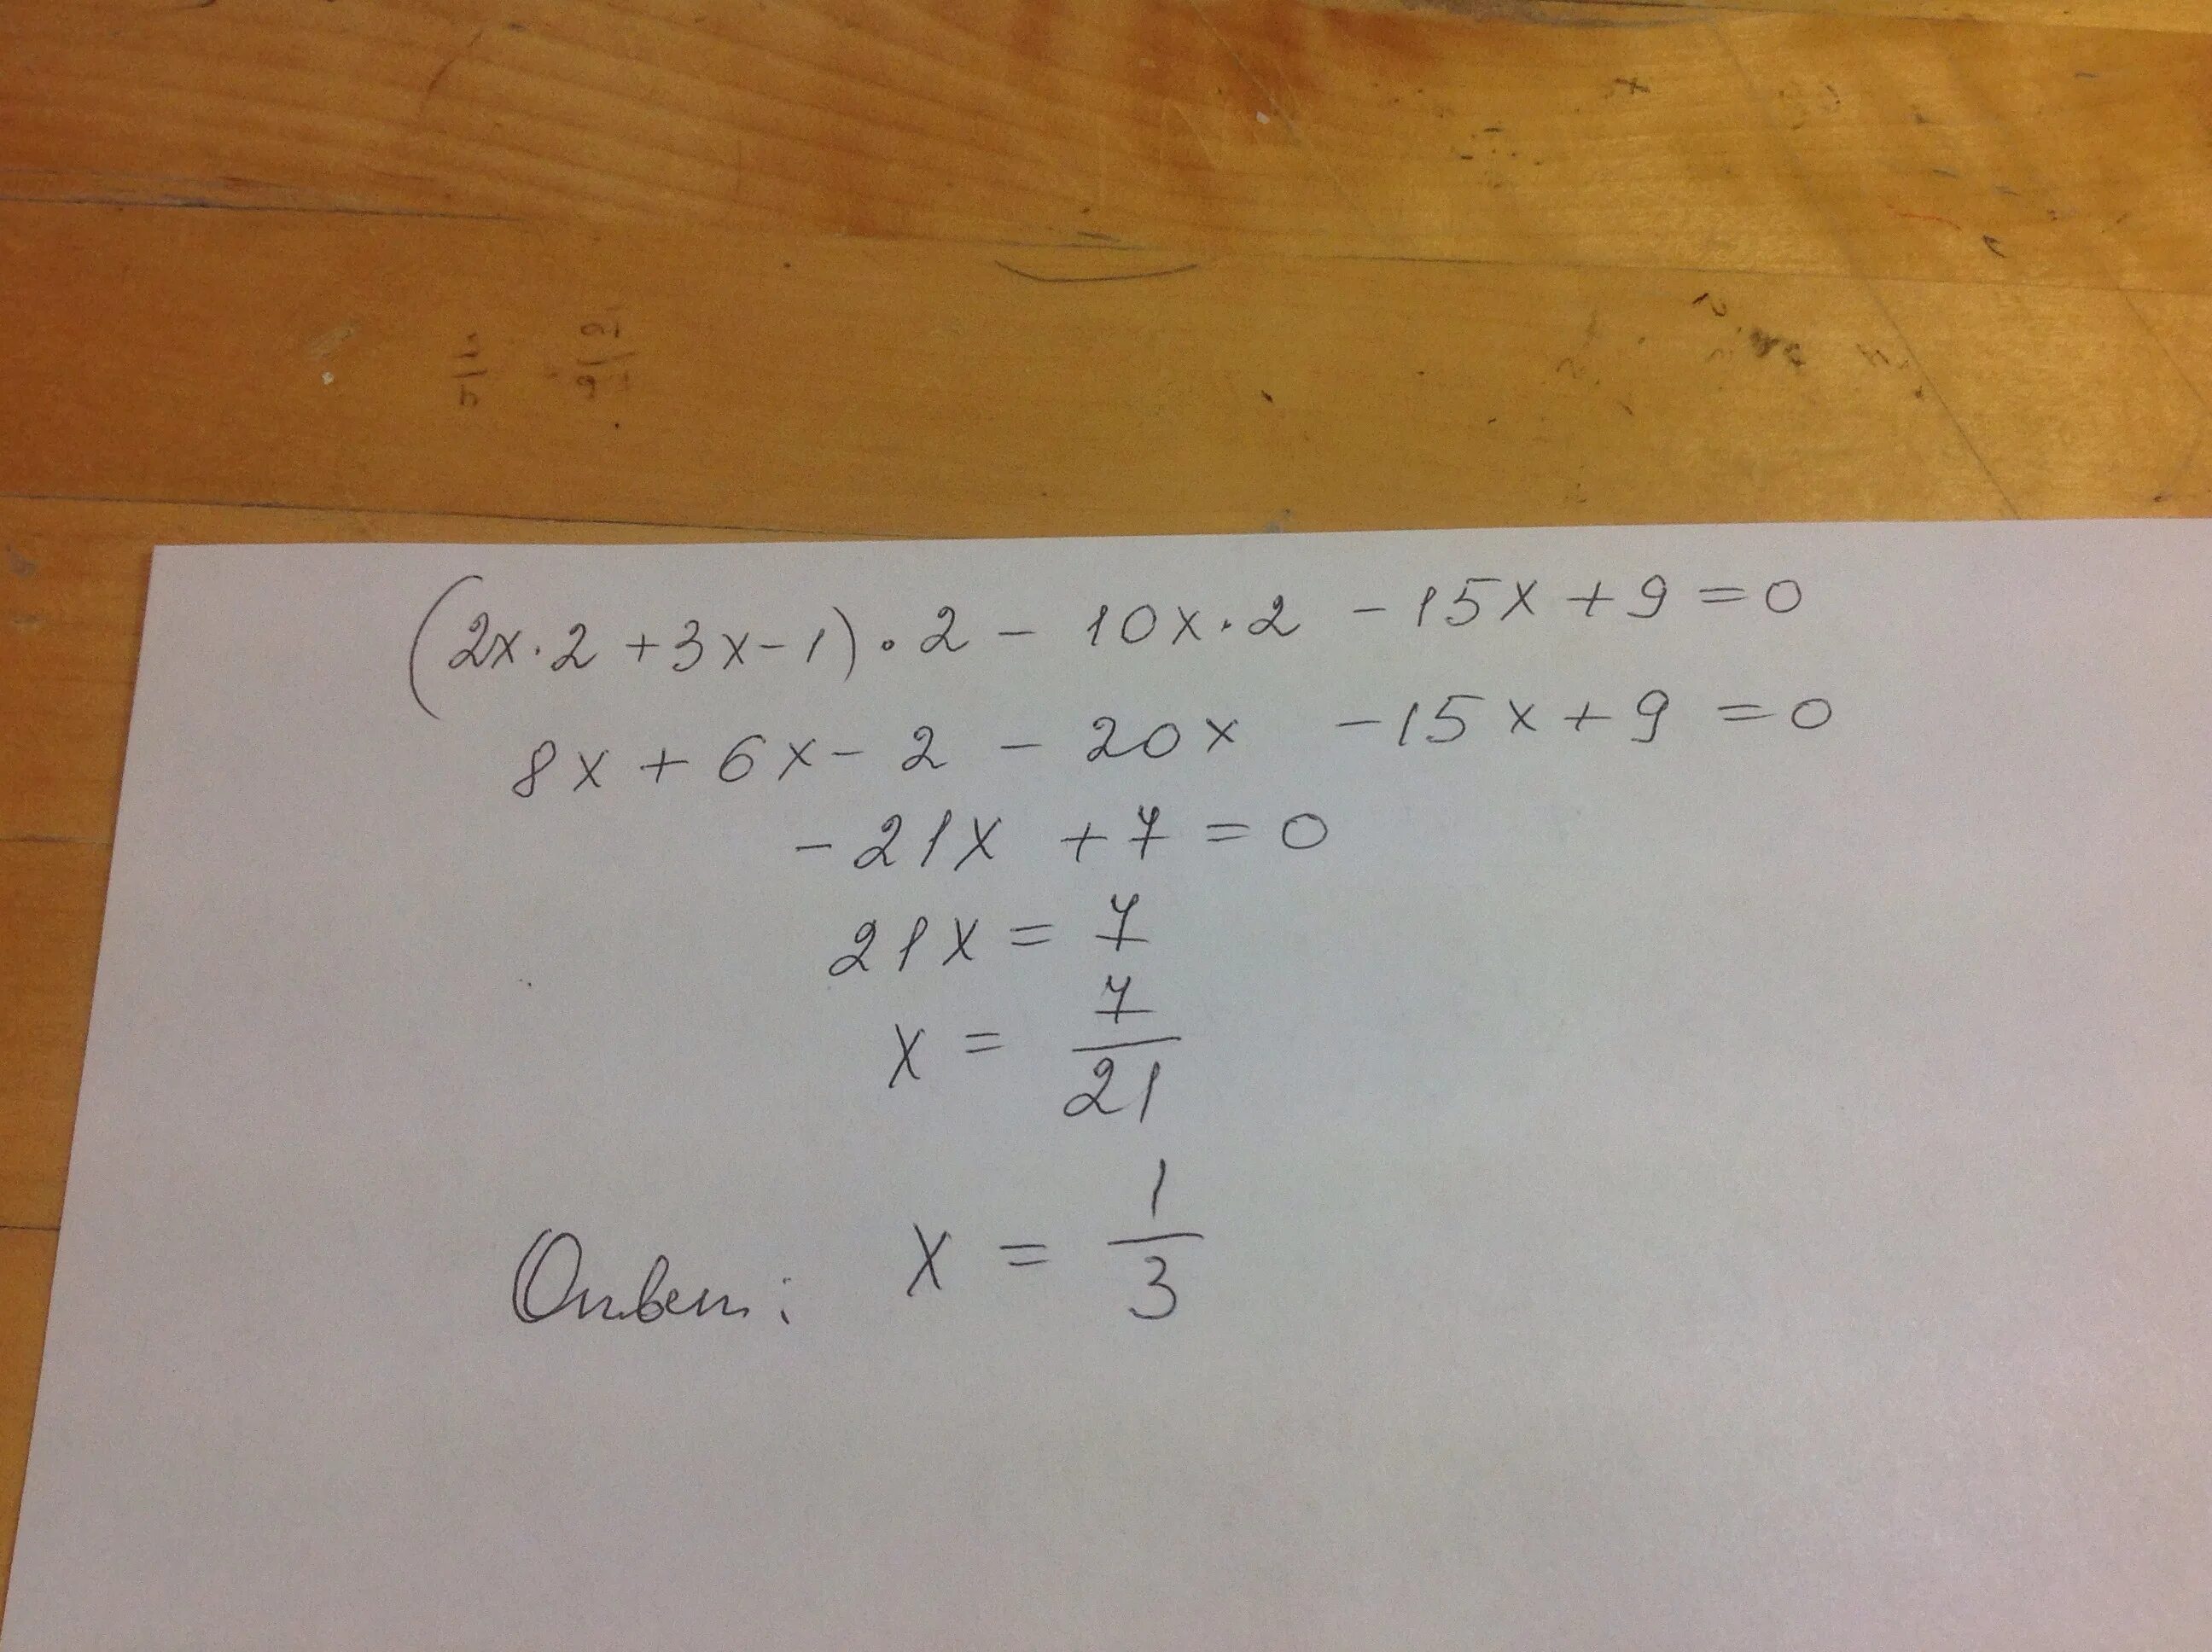 15 2x 3 решение. X3-2x2-2x+1. 10x 15 уравнение решении. 1/2x2-10. (X - 15) + (3x - 7) = 2(x−15)+(3x−7)=2.